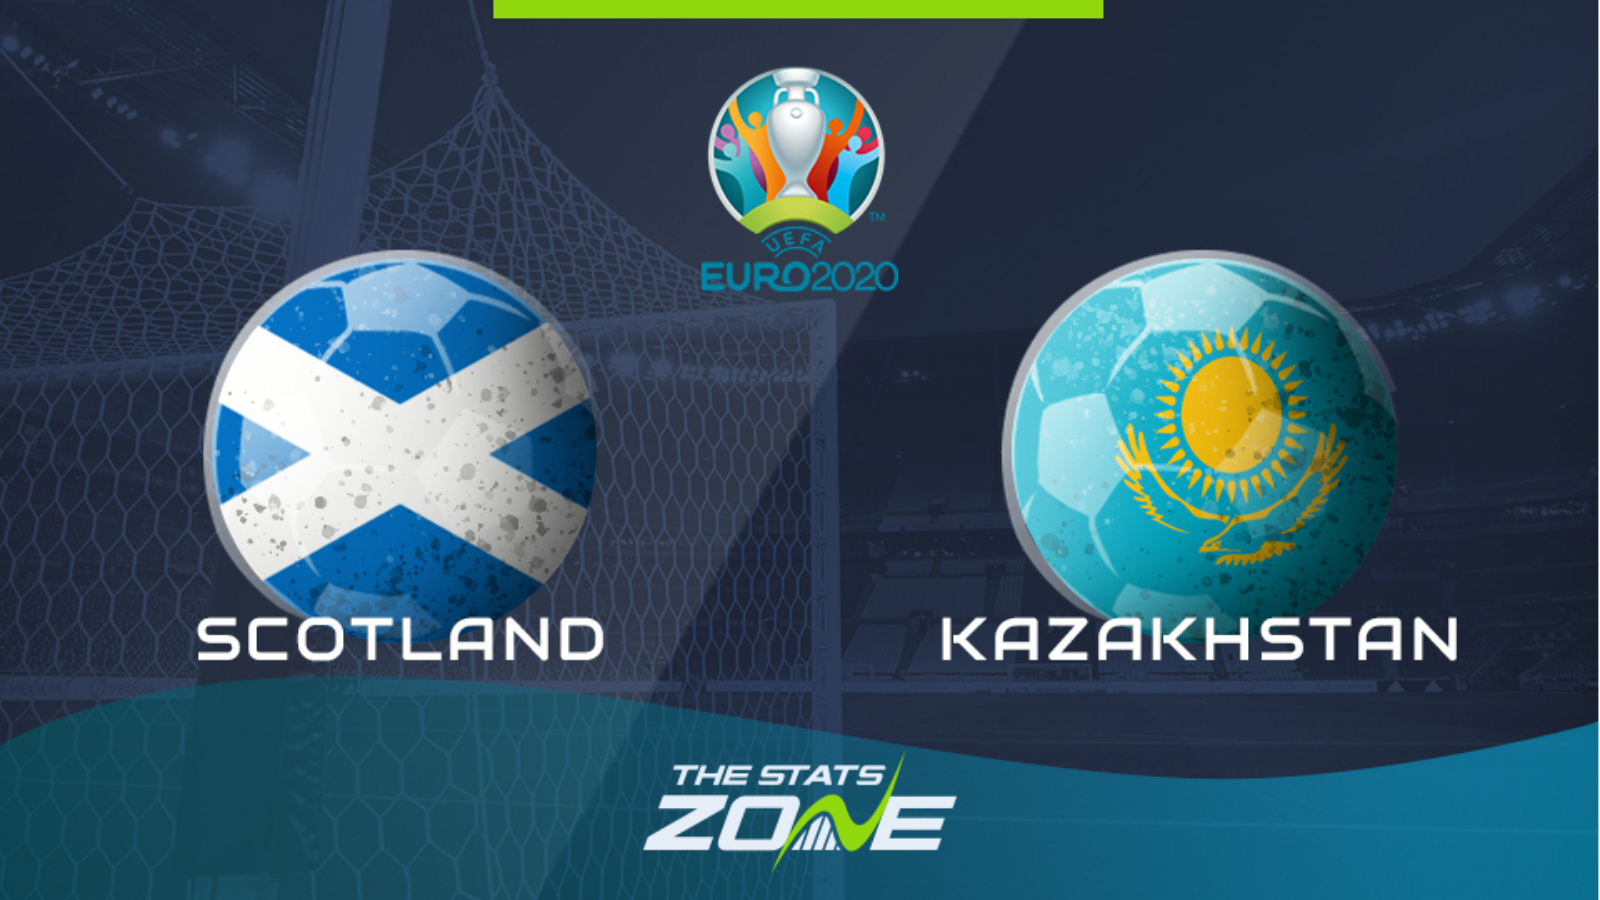 Scotland v Kazkhstan games badge euro 2020 77